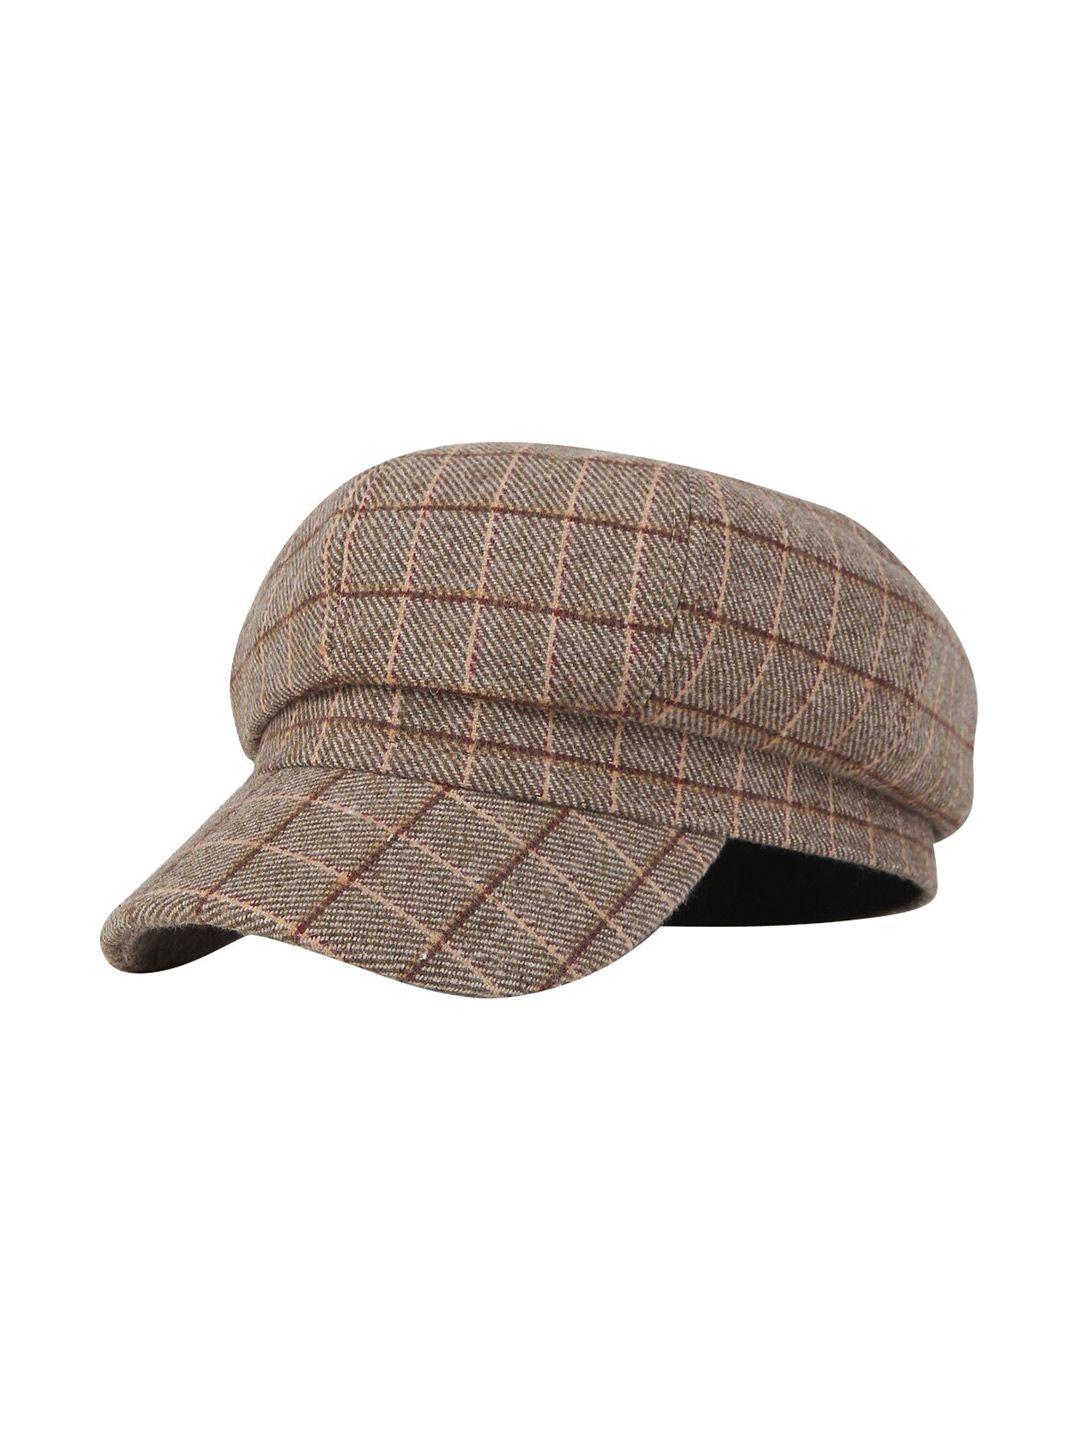 isweven unisex brown & beige printed ascot cap